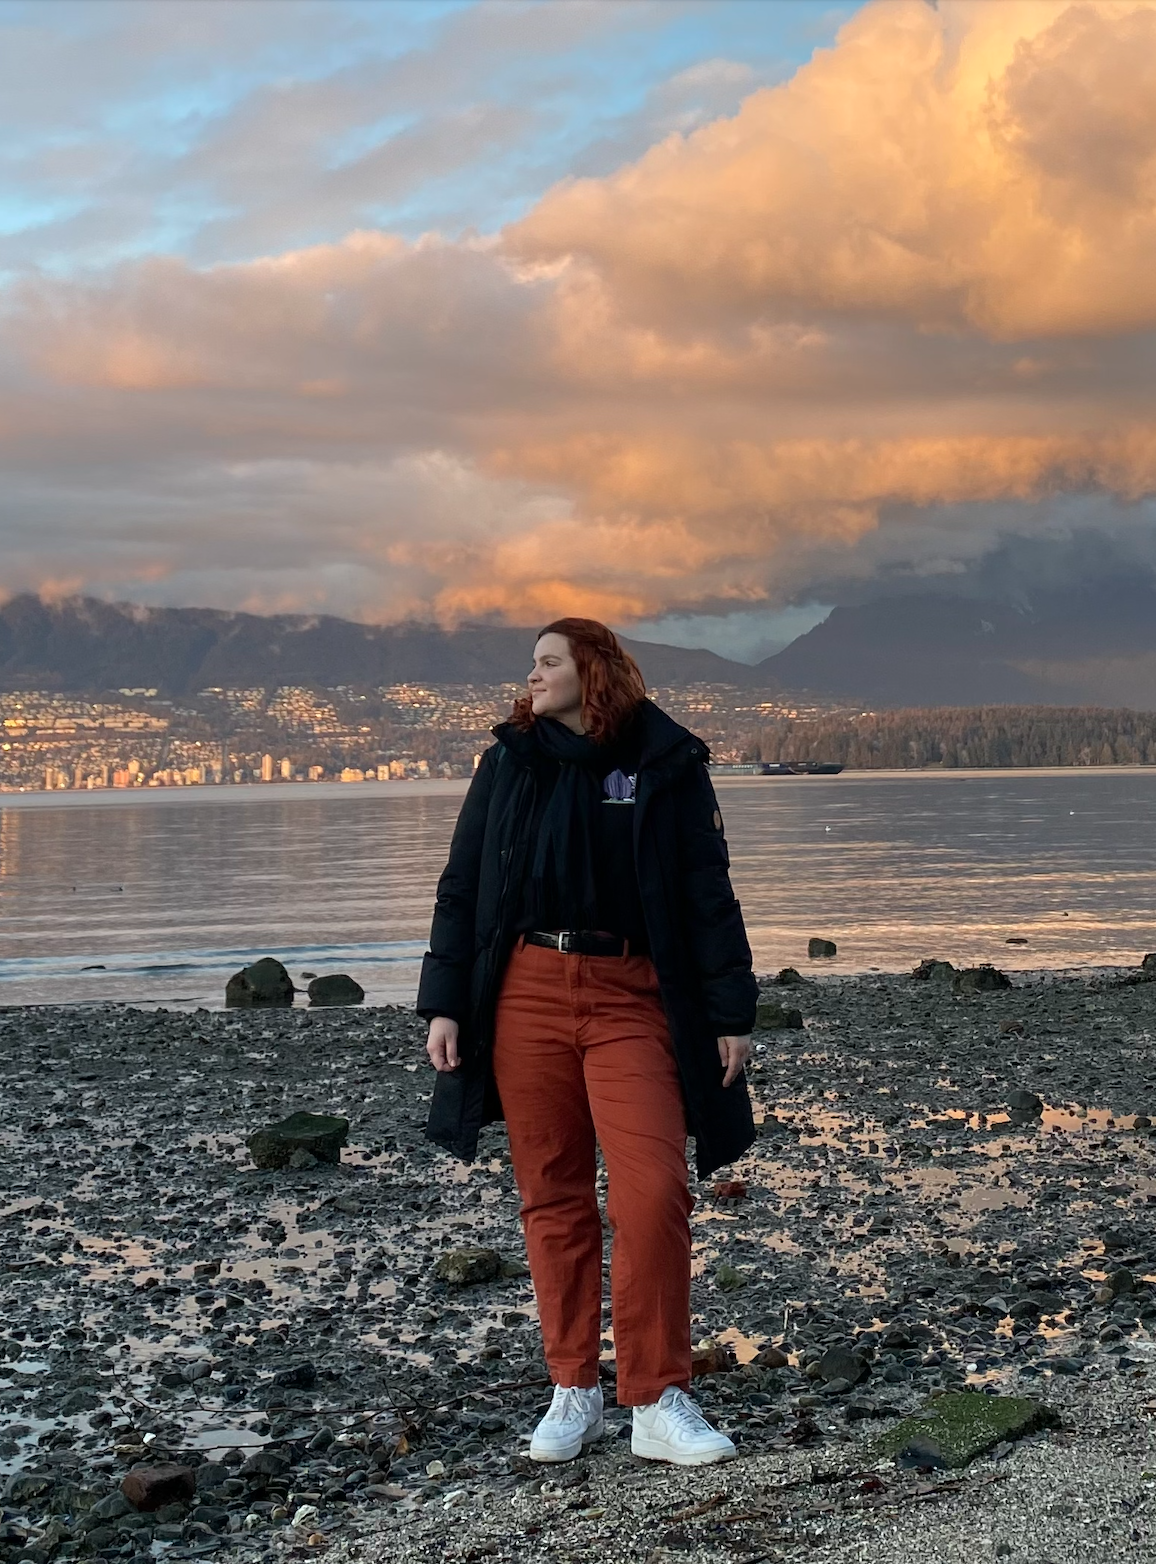 Author Valeriia Pelevina standing on a rocky beach under a cloudy sky